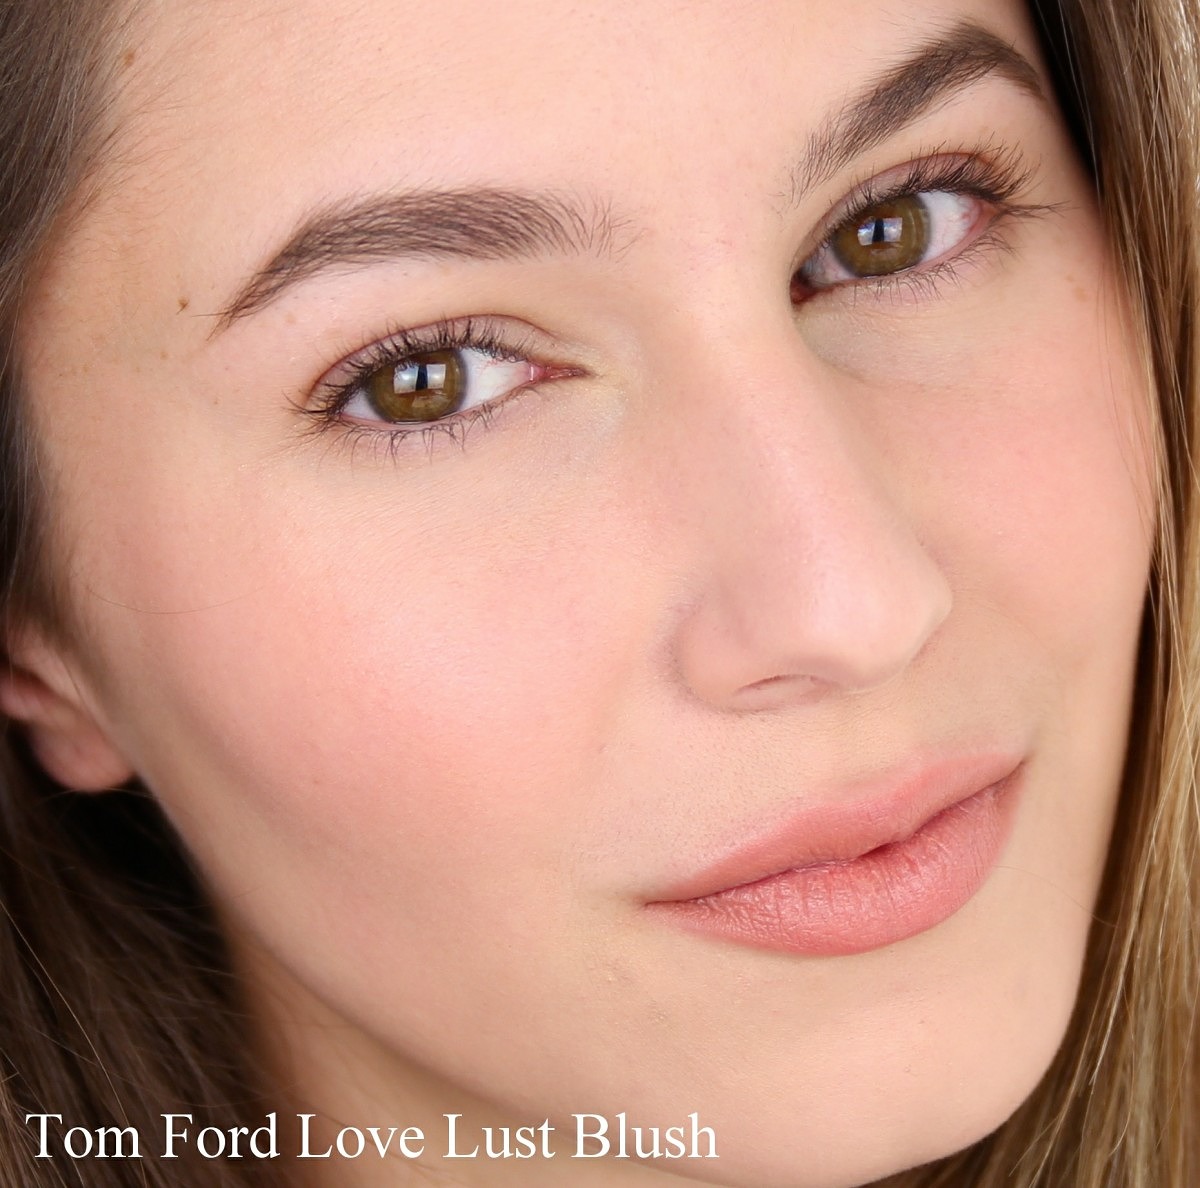 Tom Ford Love Lust Blush